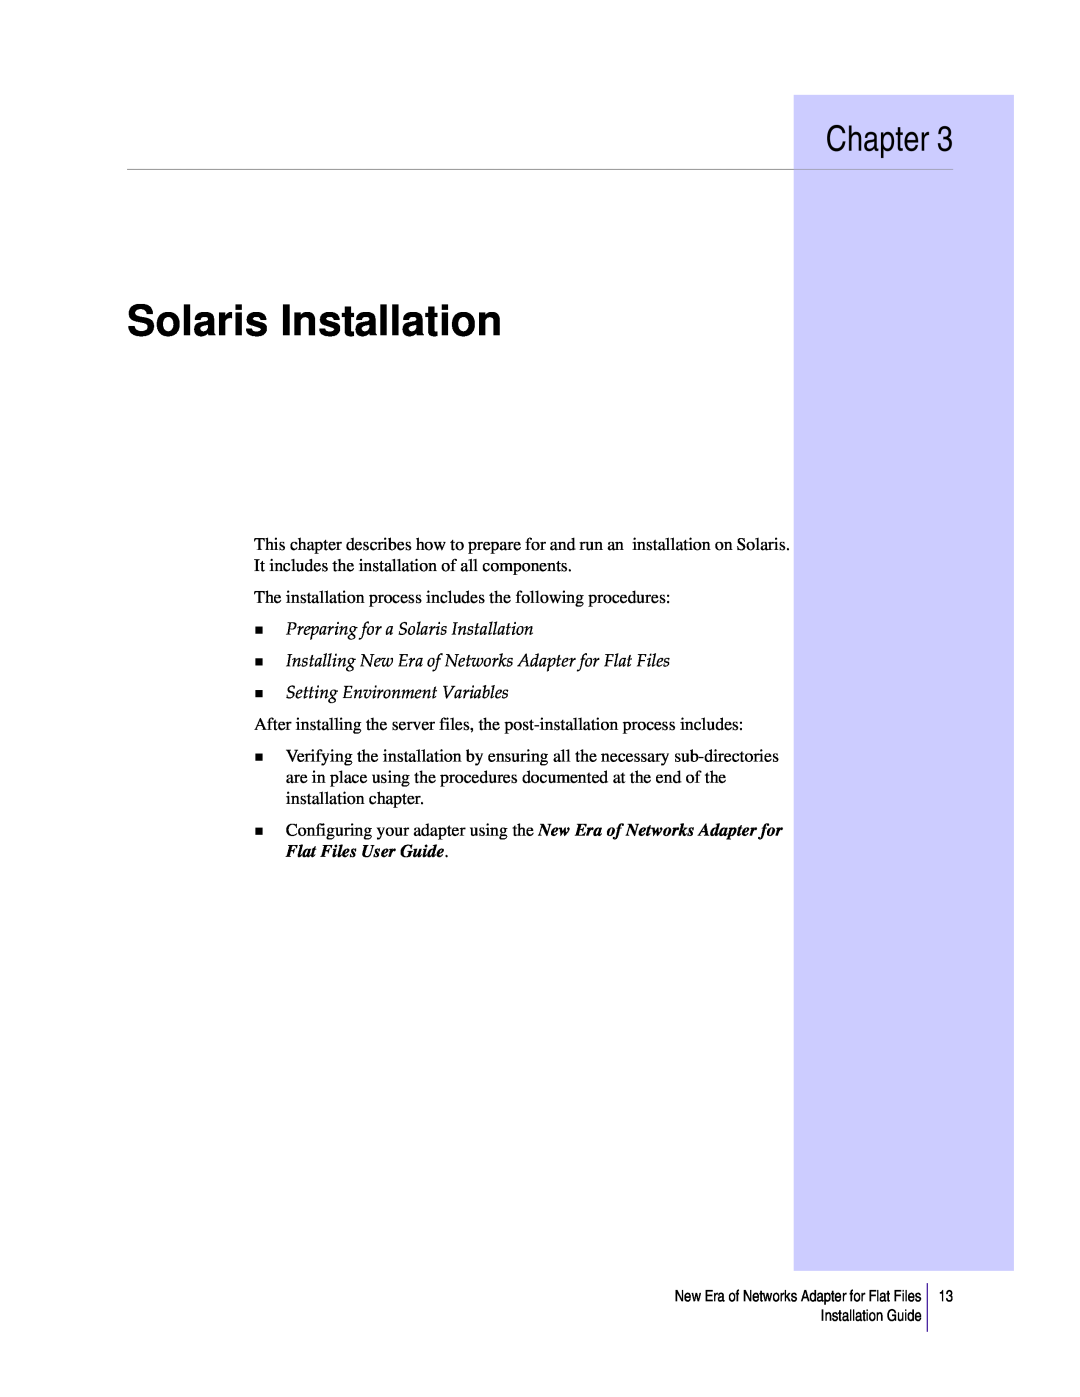 Sybase 3.8 manual Preparing for a Solaris Installation, Setting Environment Variables, Chapter 